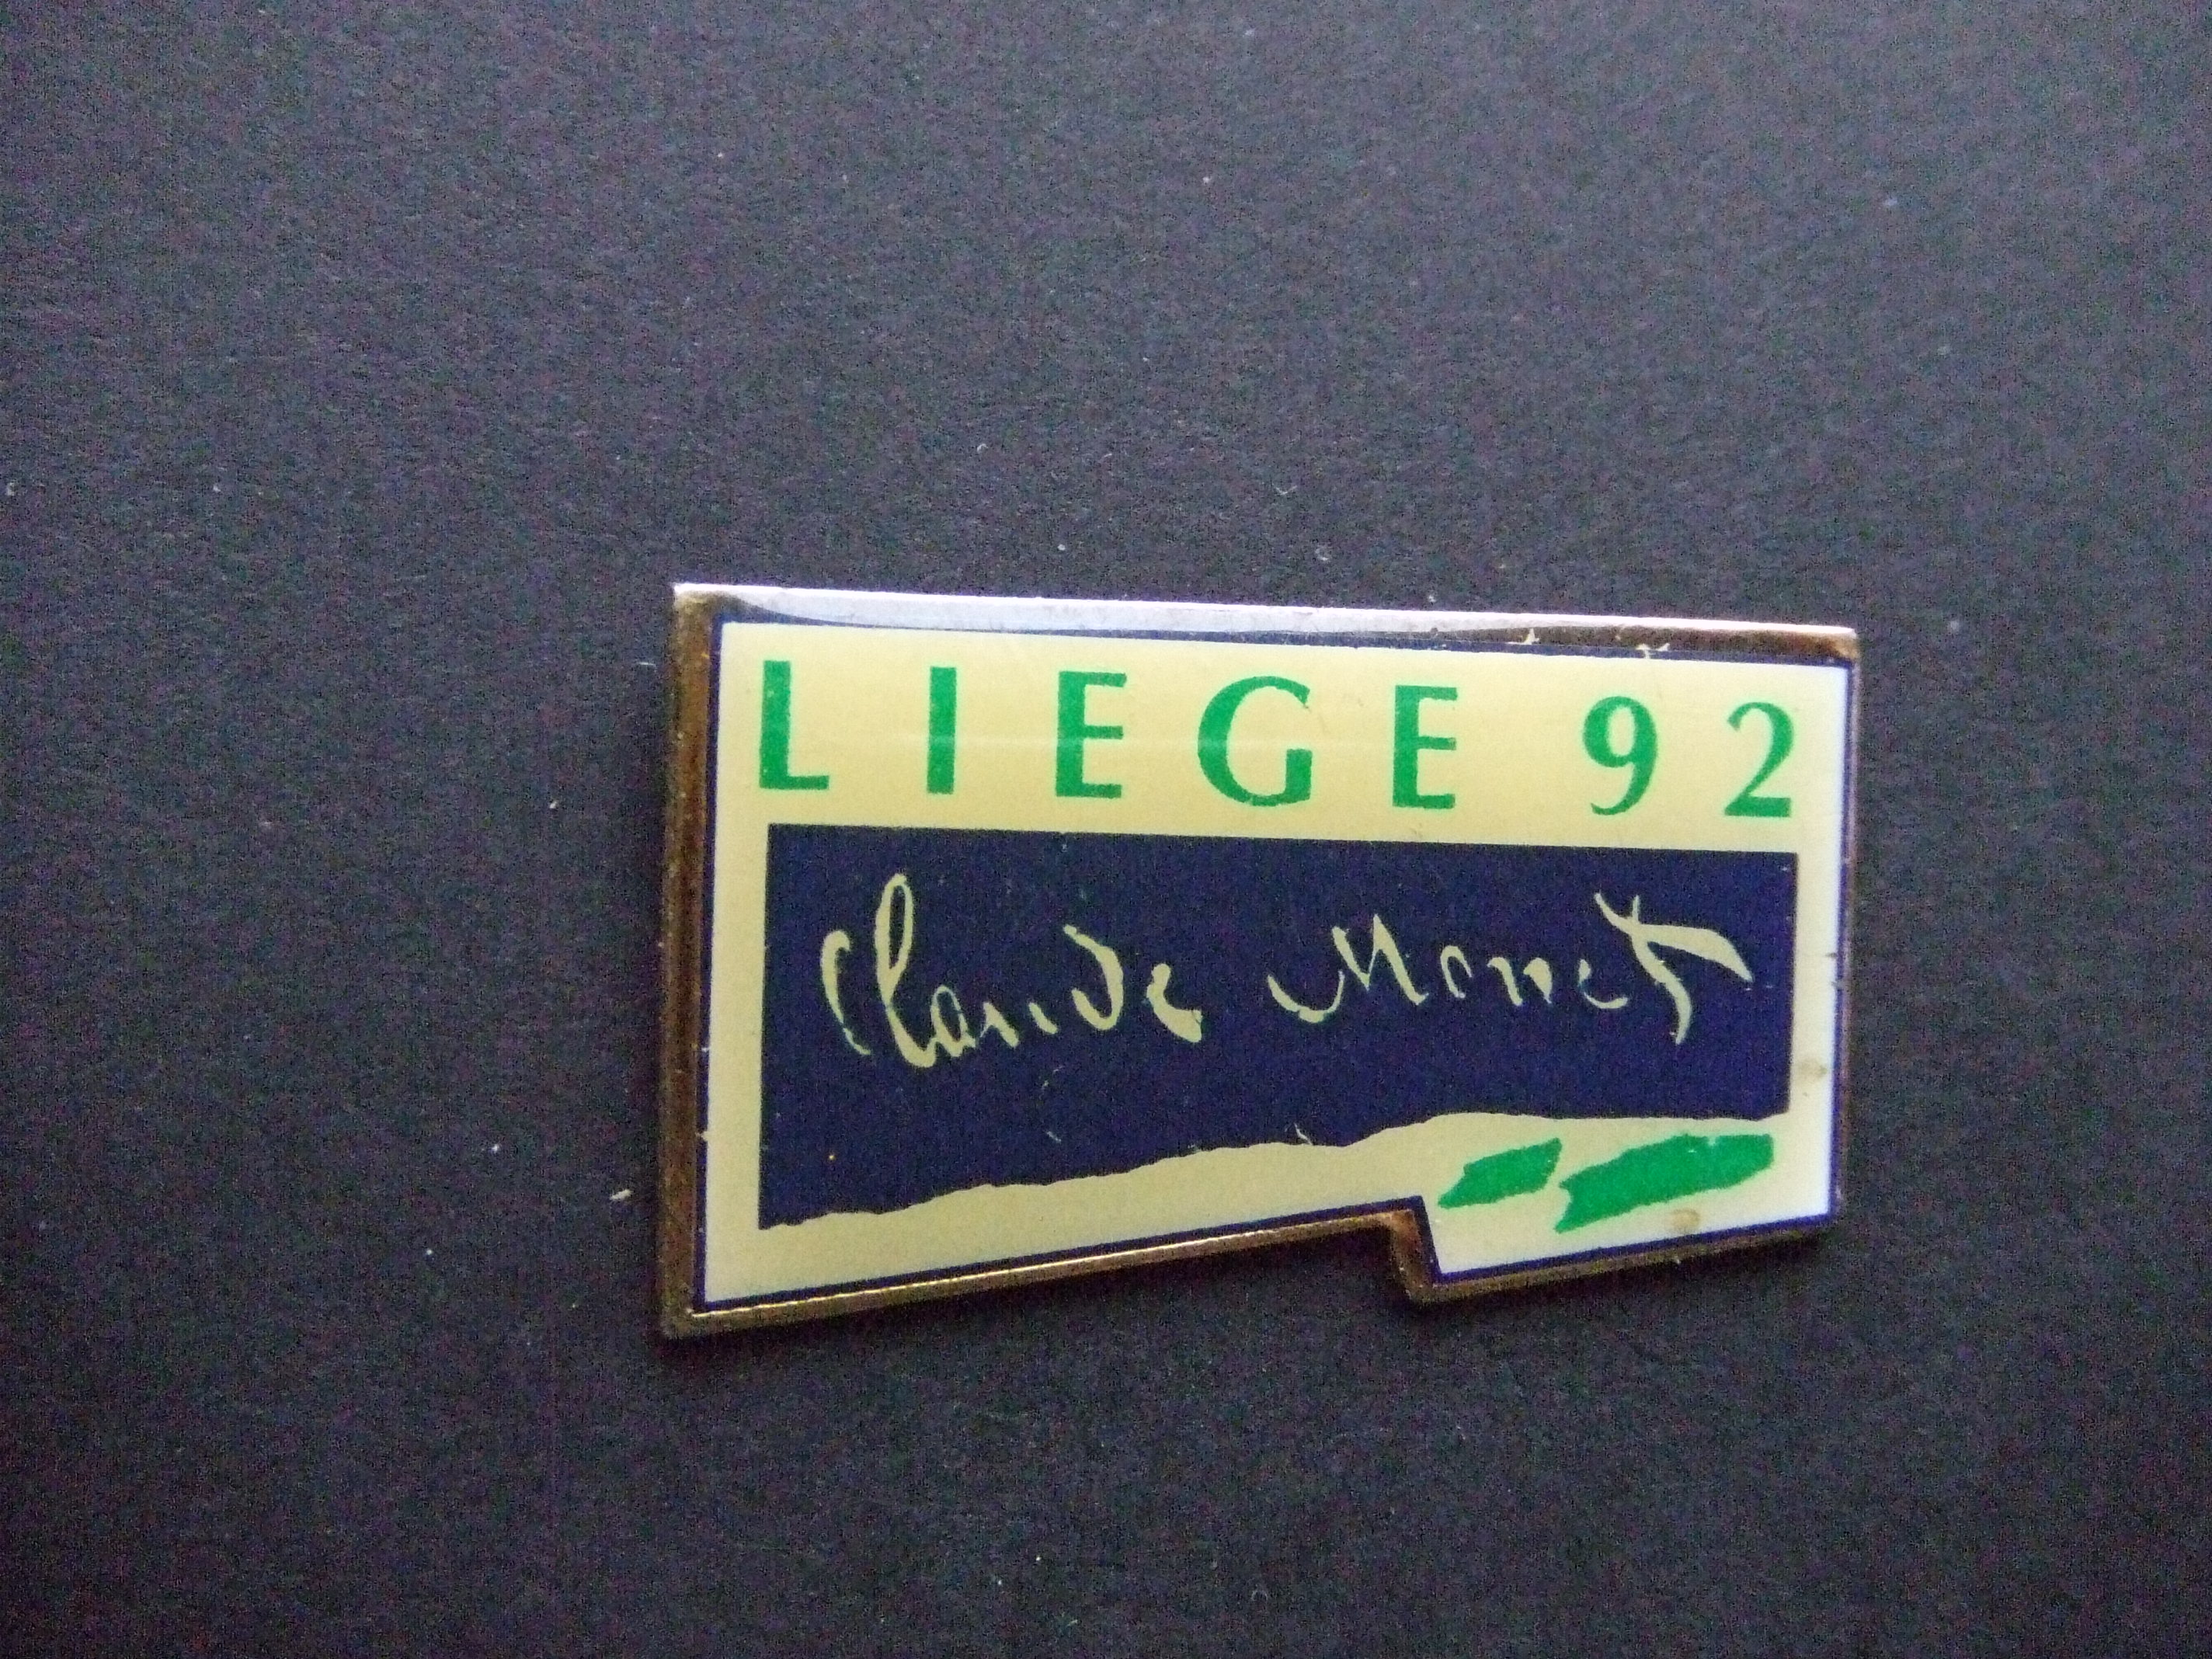 Claude Monet Franse schilder tentoonstelling 1992 Liège